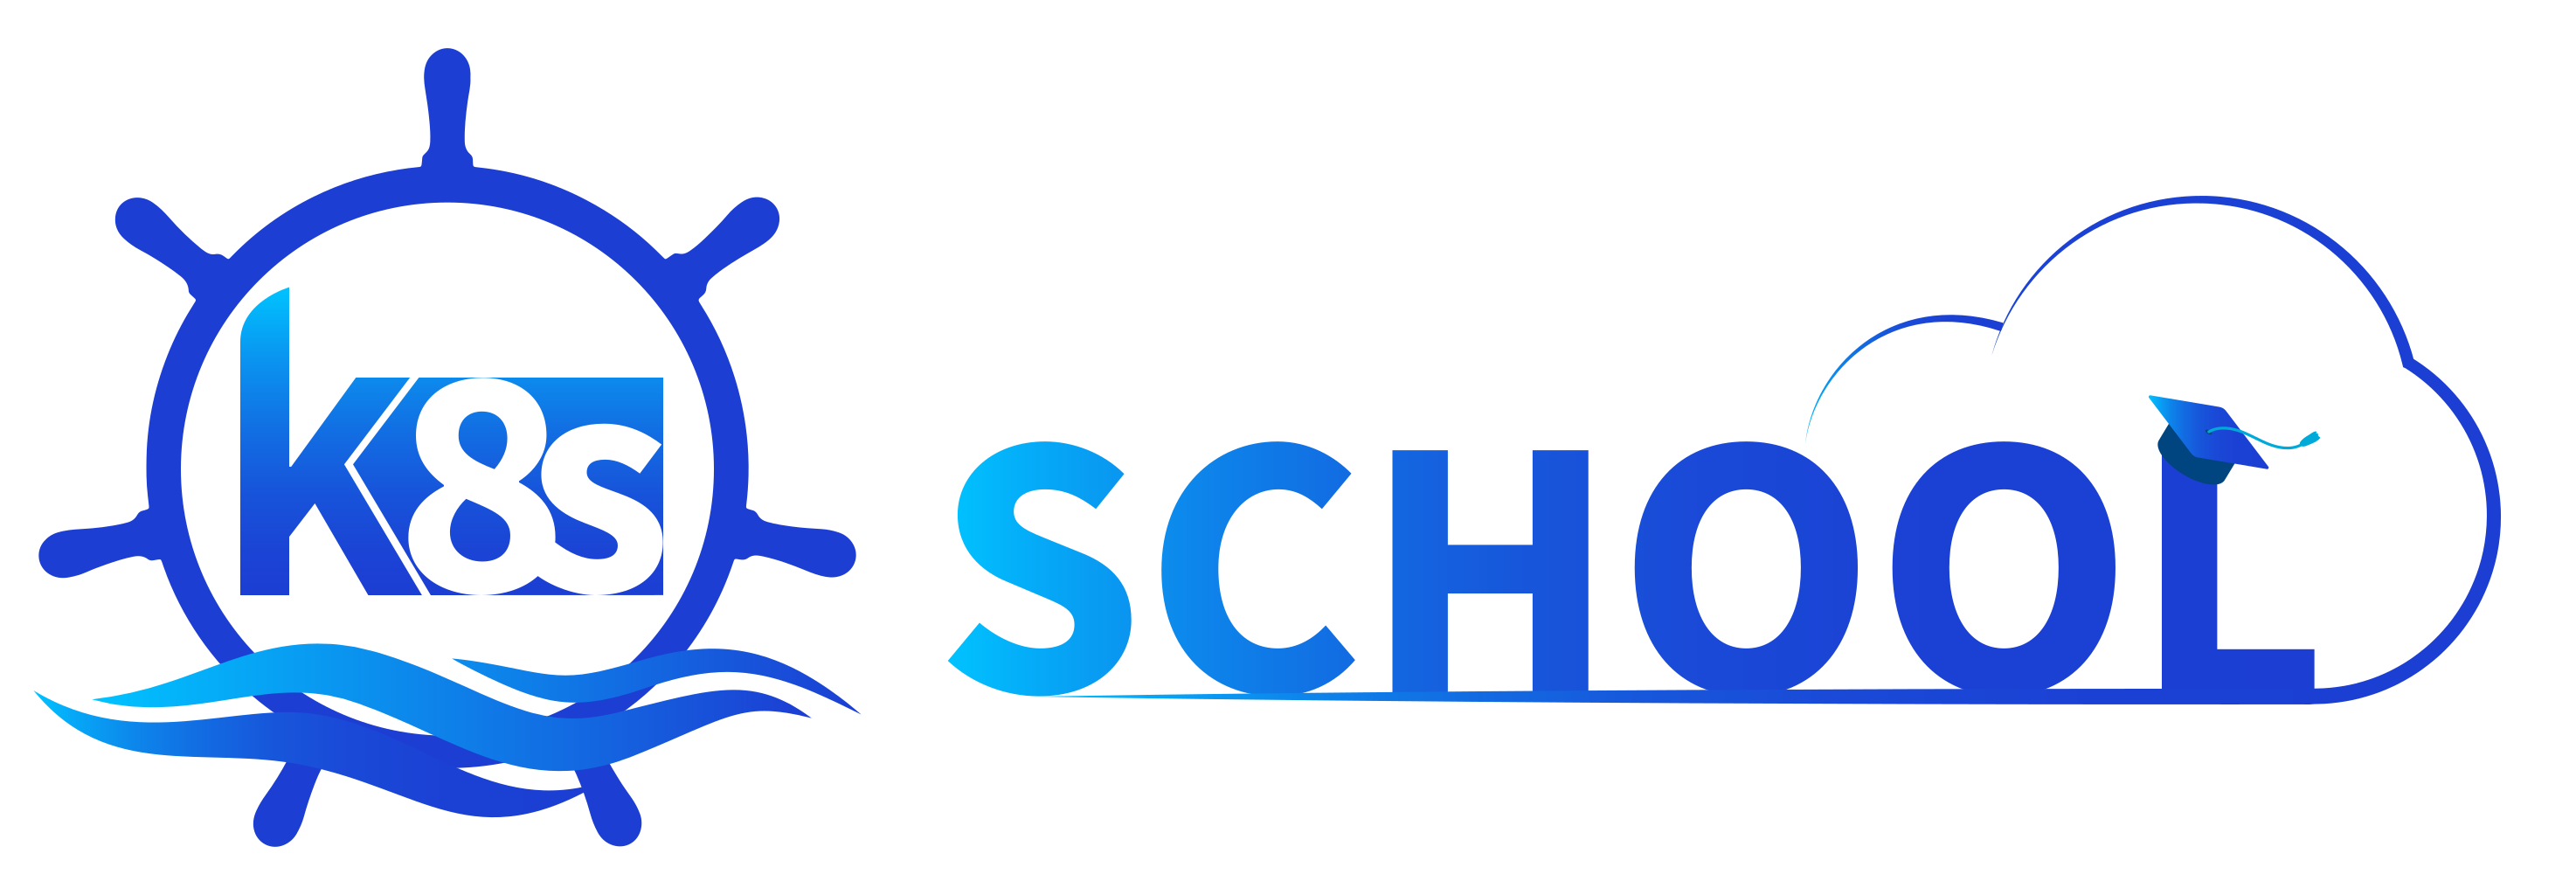 Logo K8s school